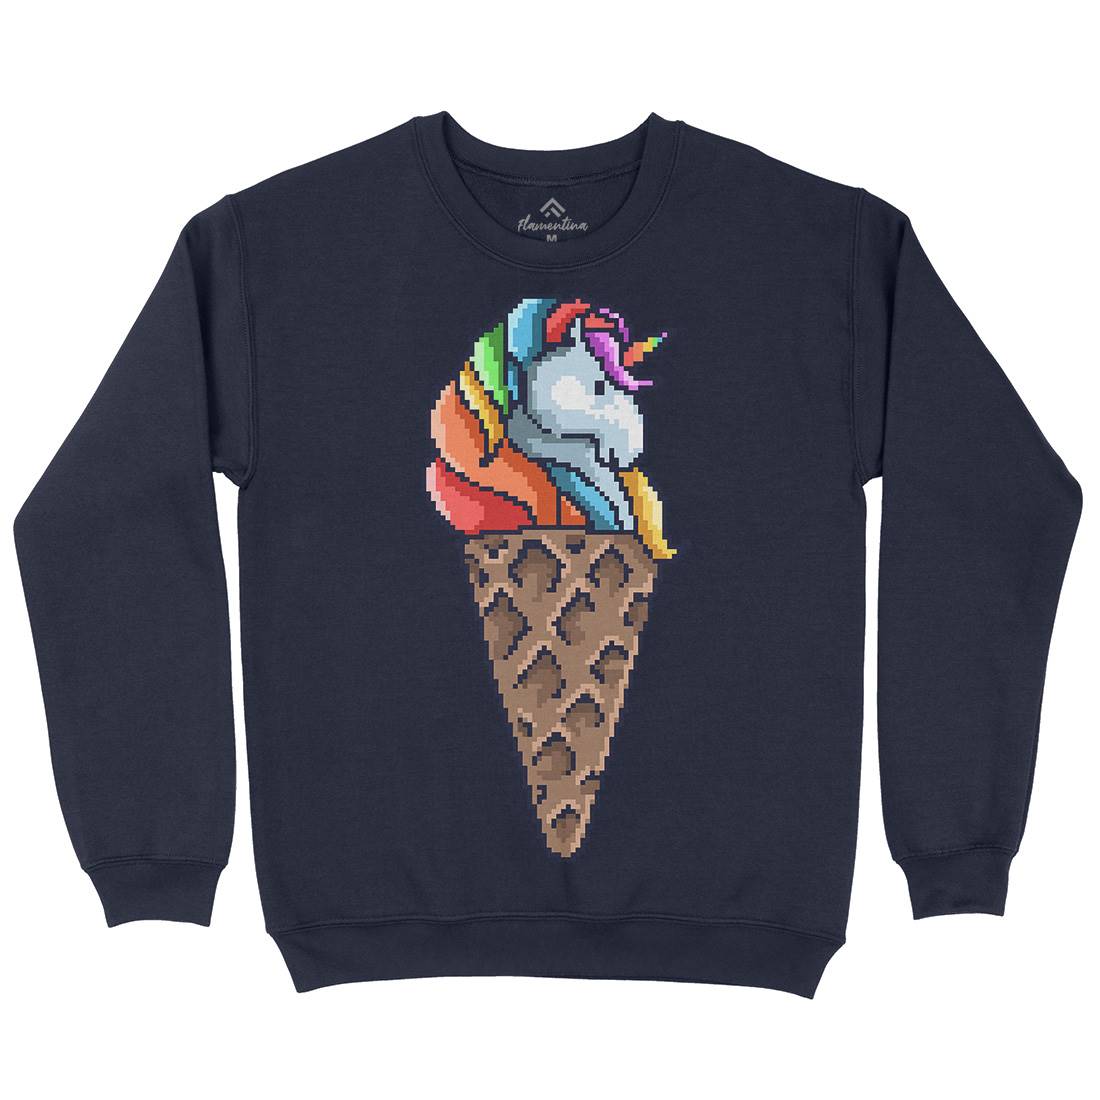 Unicorn Cone Kids Crew Neck Sweatshirt Food B974